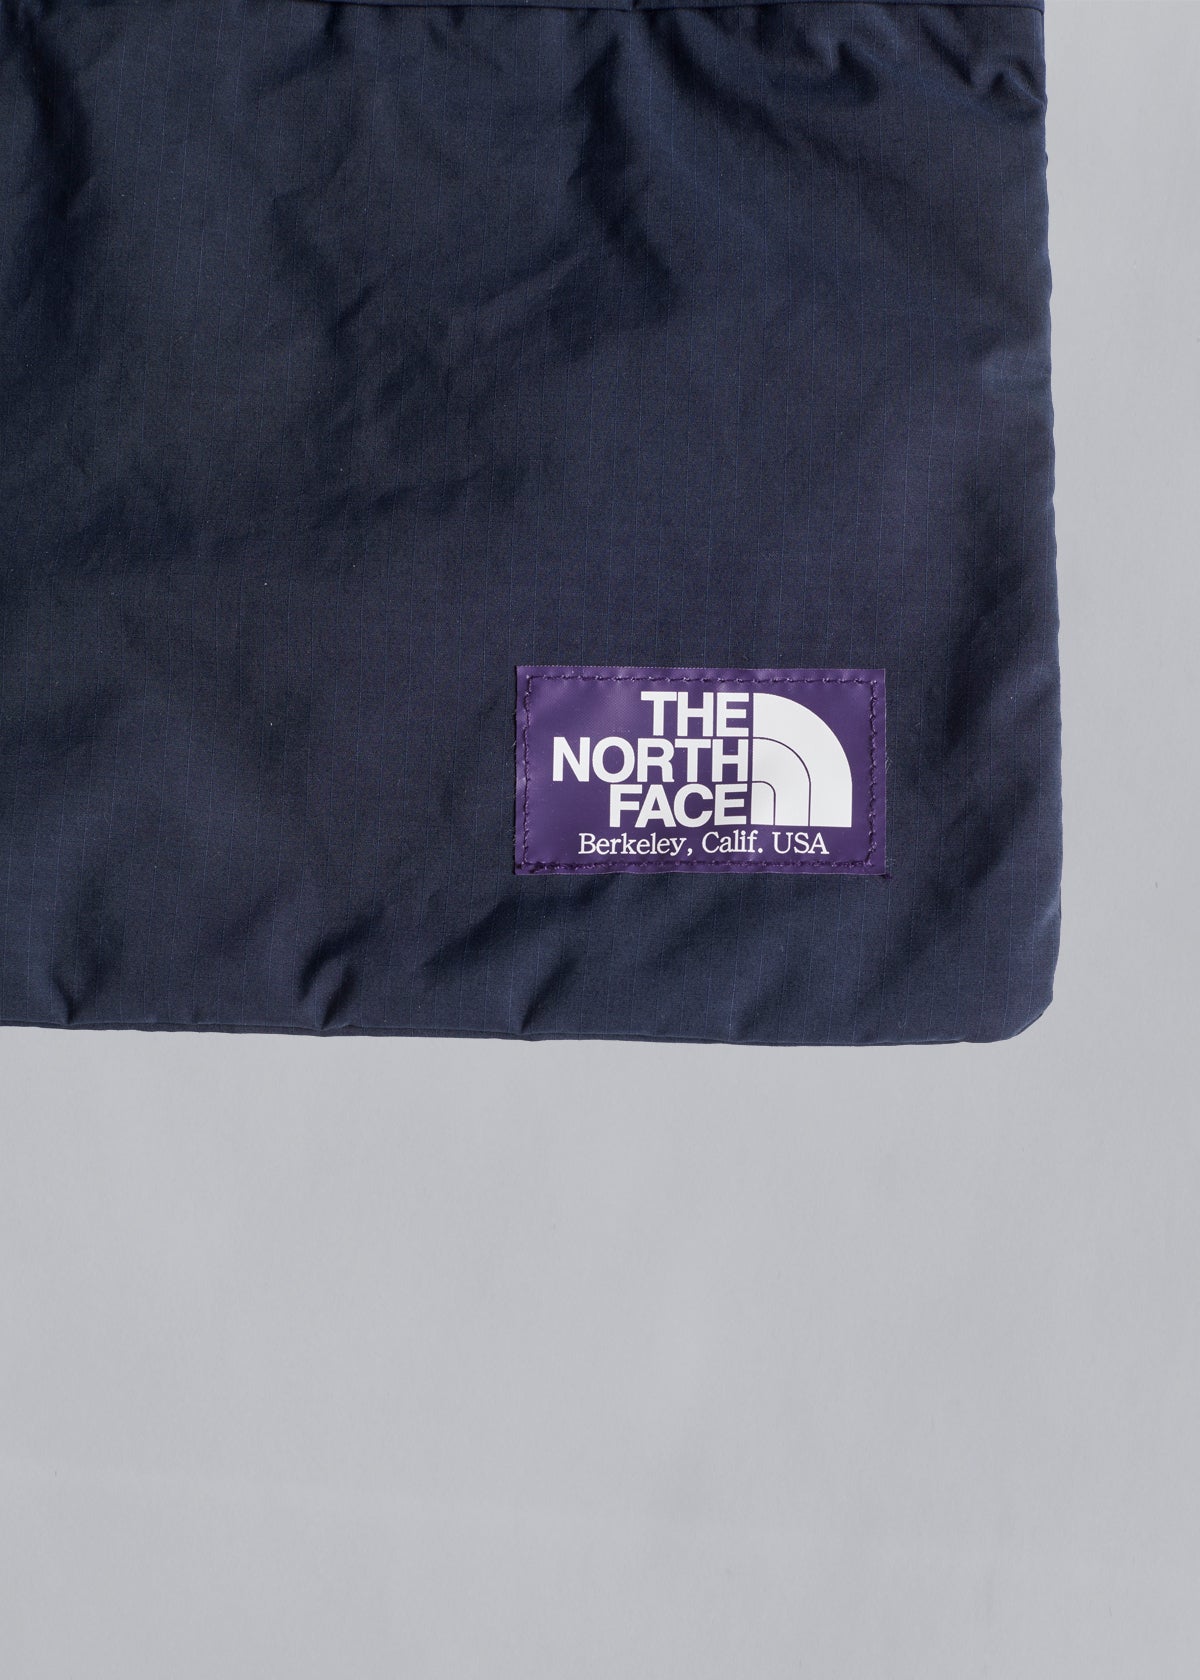 Nylon Ripstop Small Shoulder Bag SS2019 - The Archivist Store